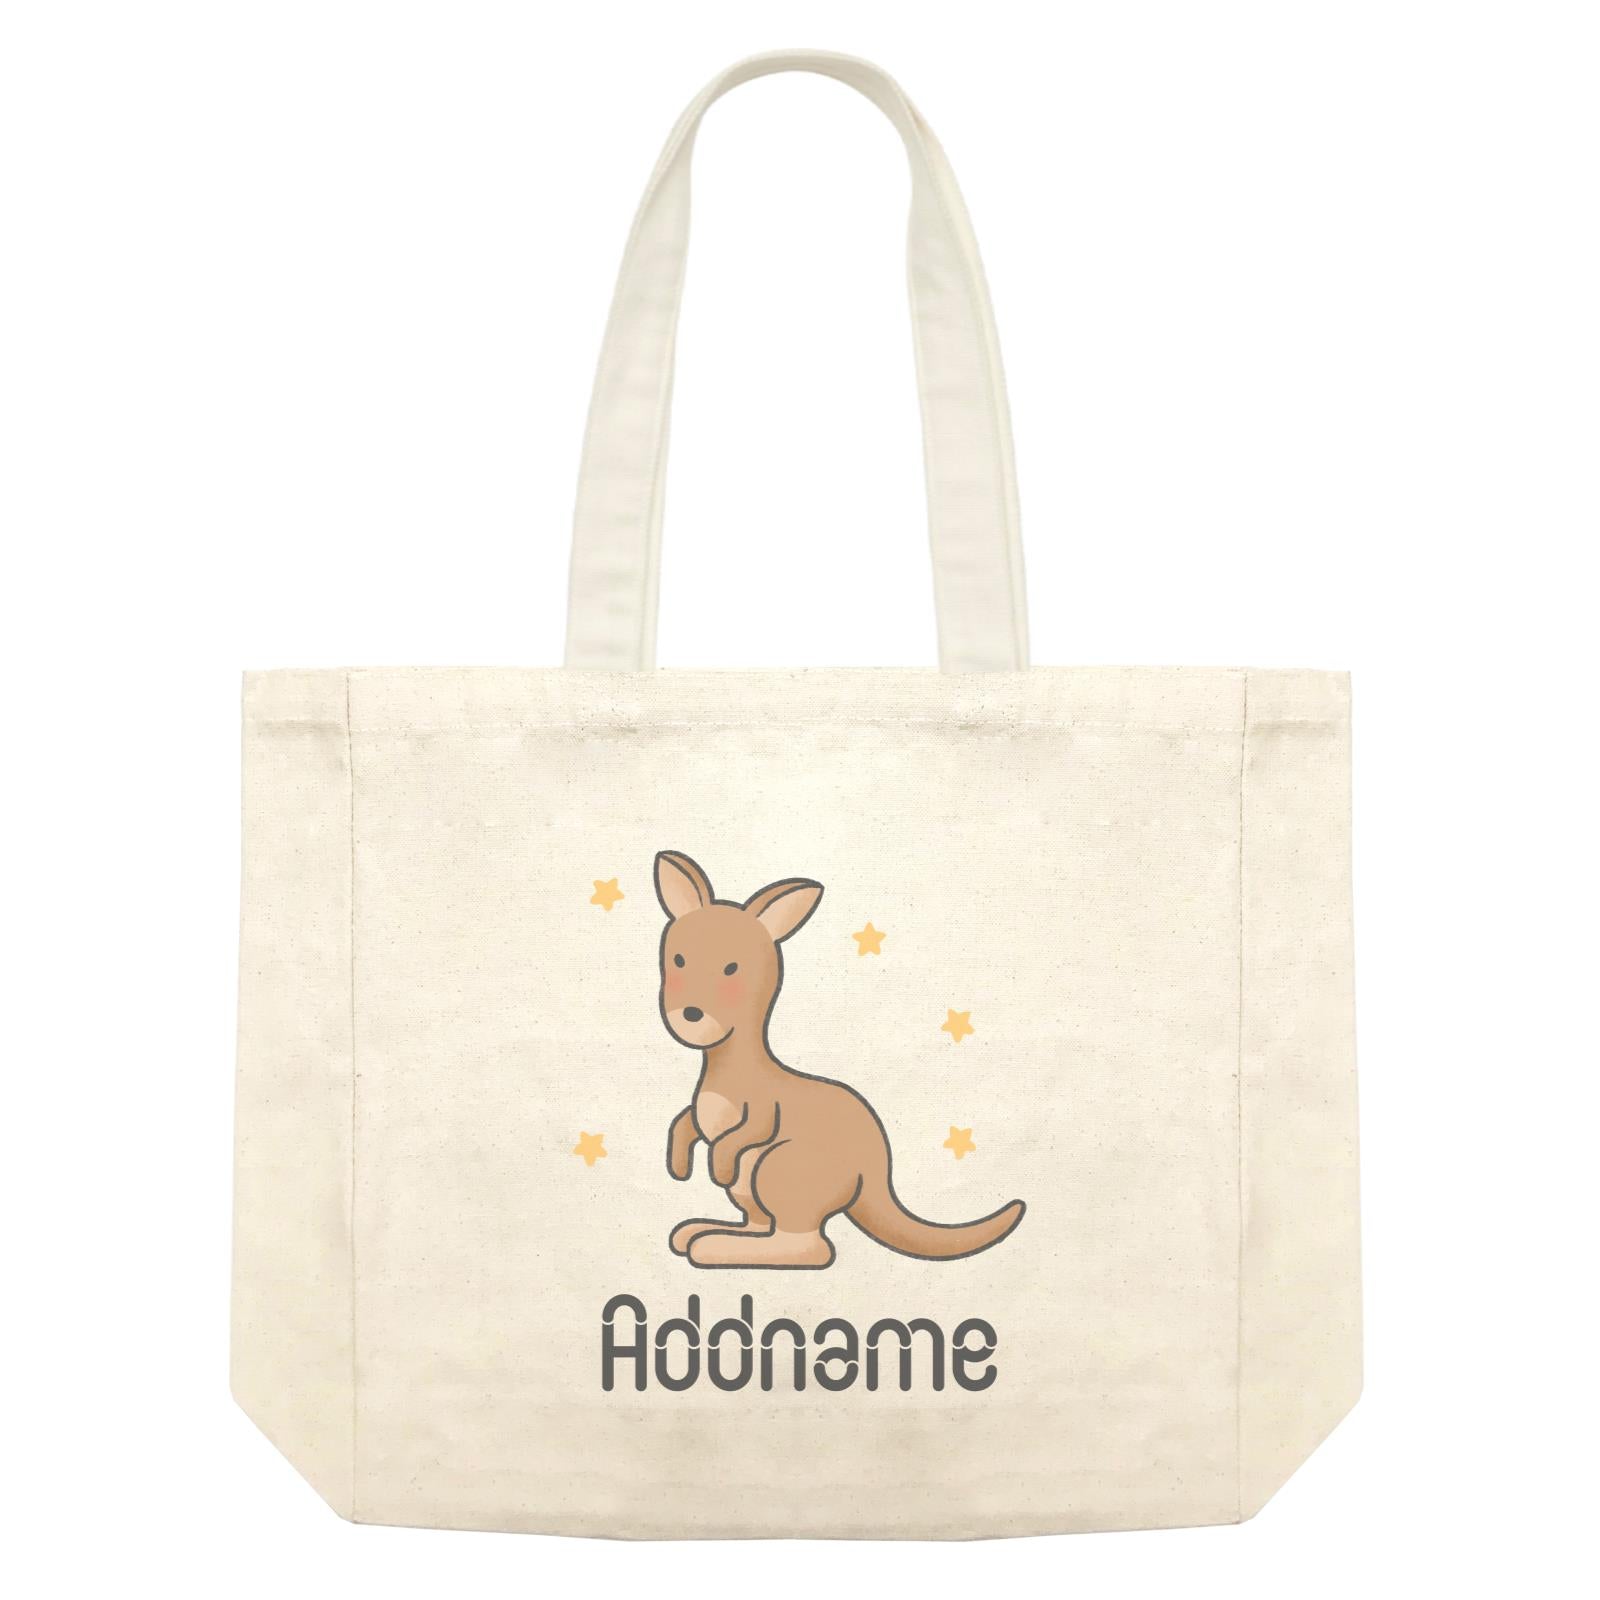 Cute Hand Drawn Style Kangaroo Addname Shopping Bag